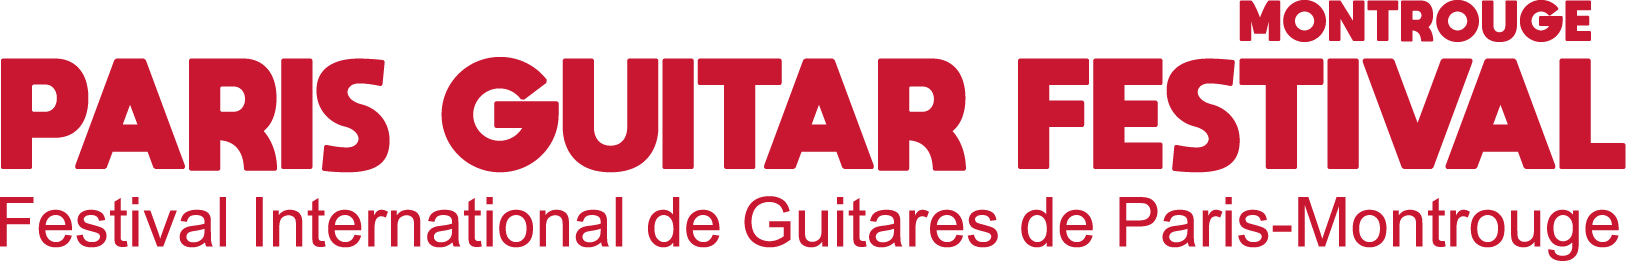 Paris Guitar Festival